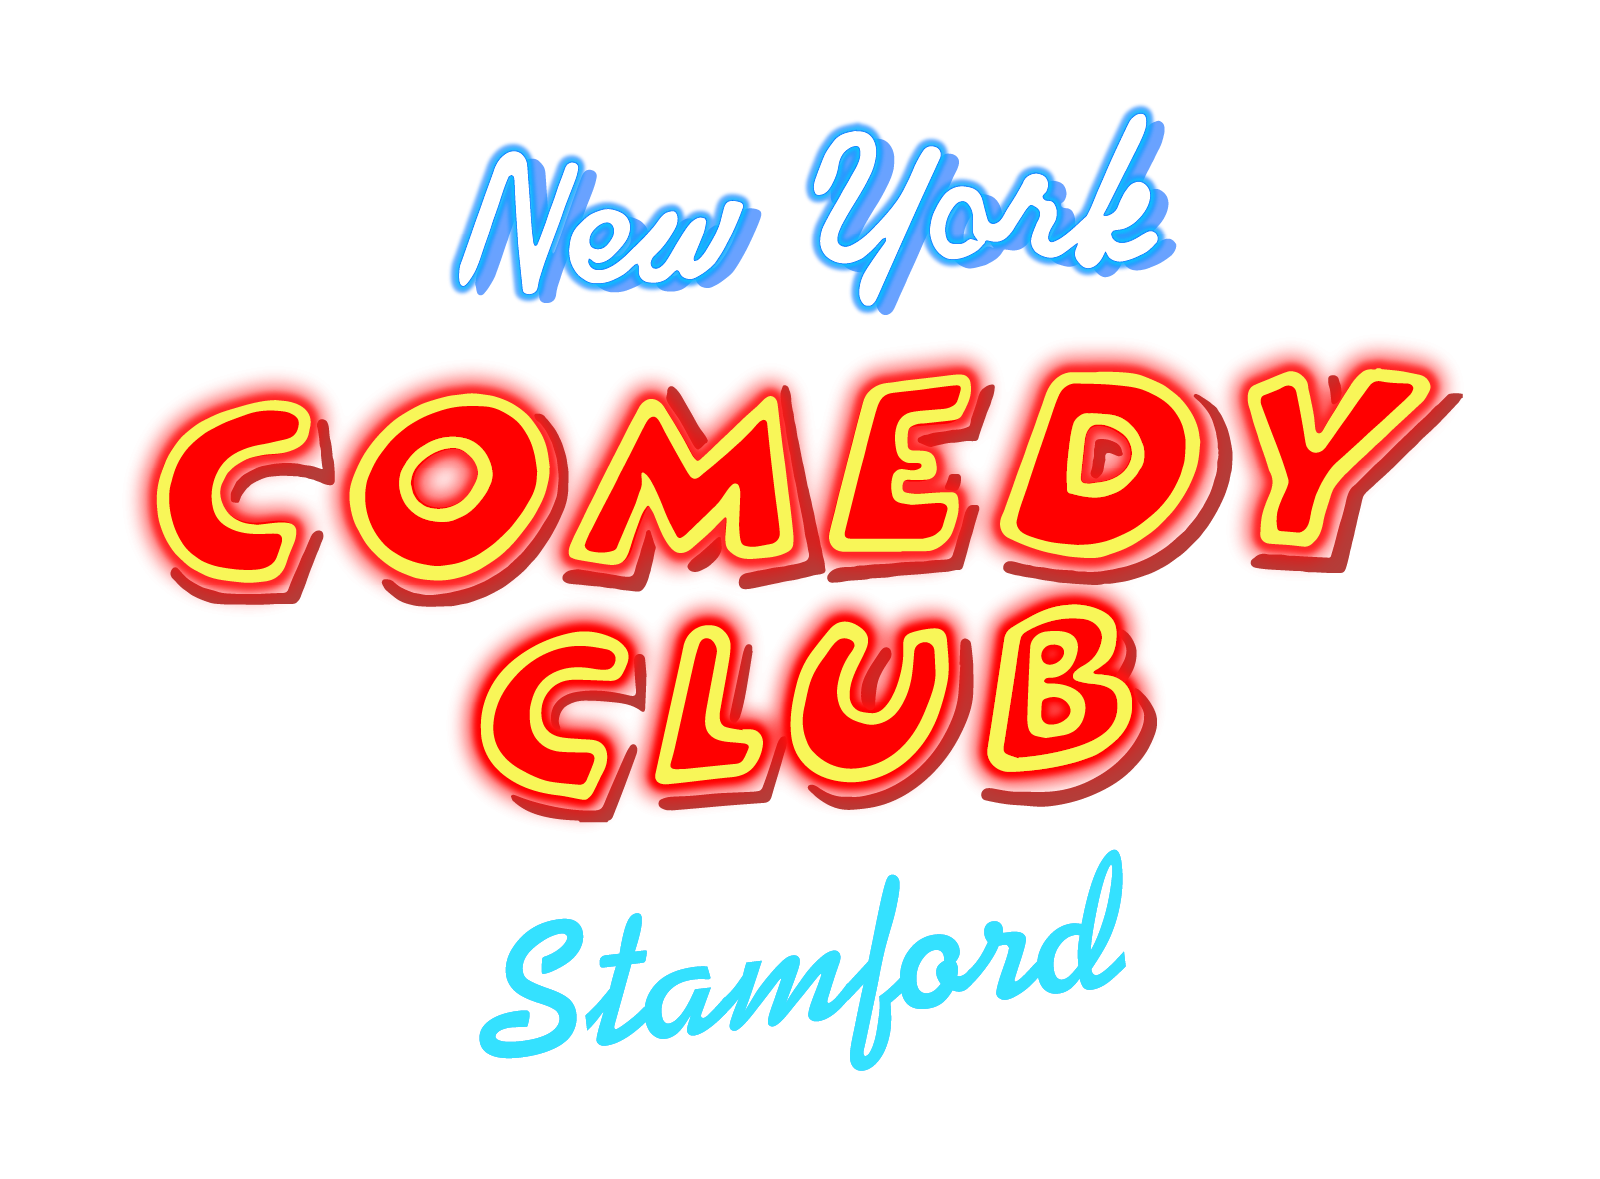 New York Comedy Club Stamford